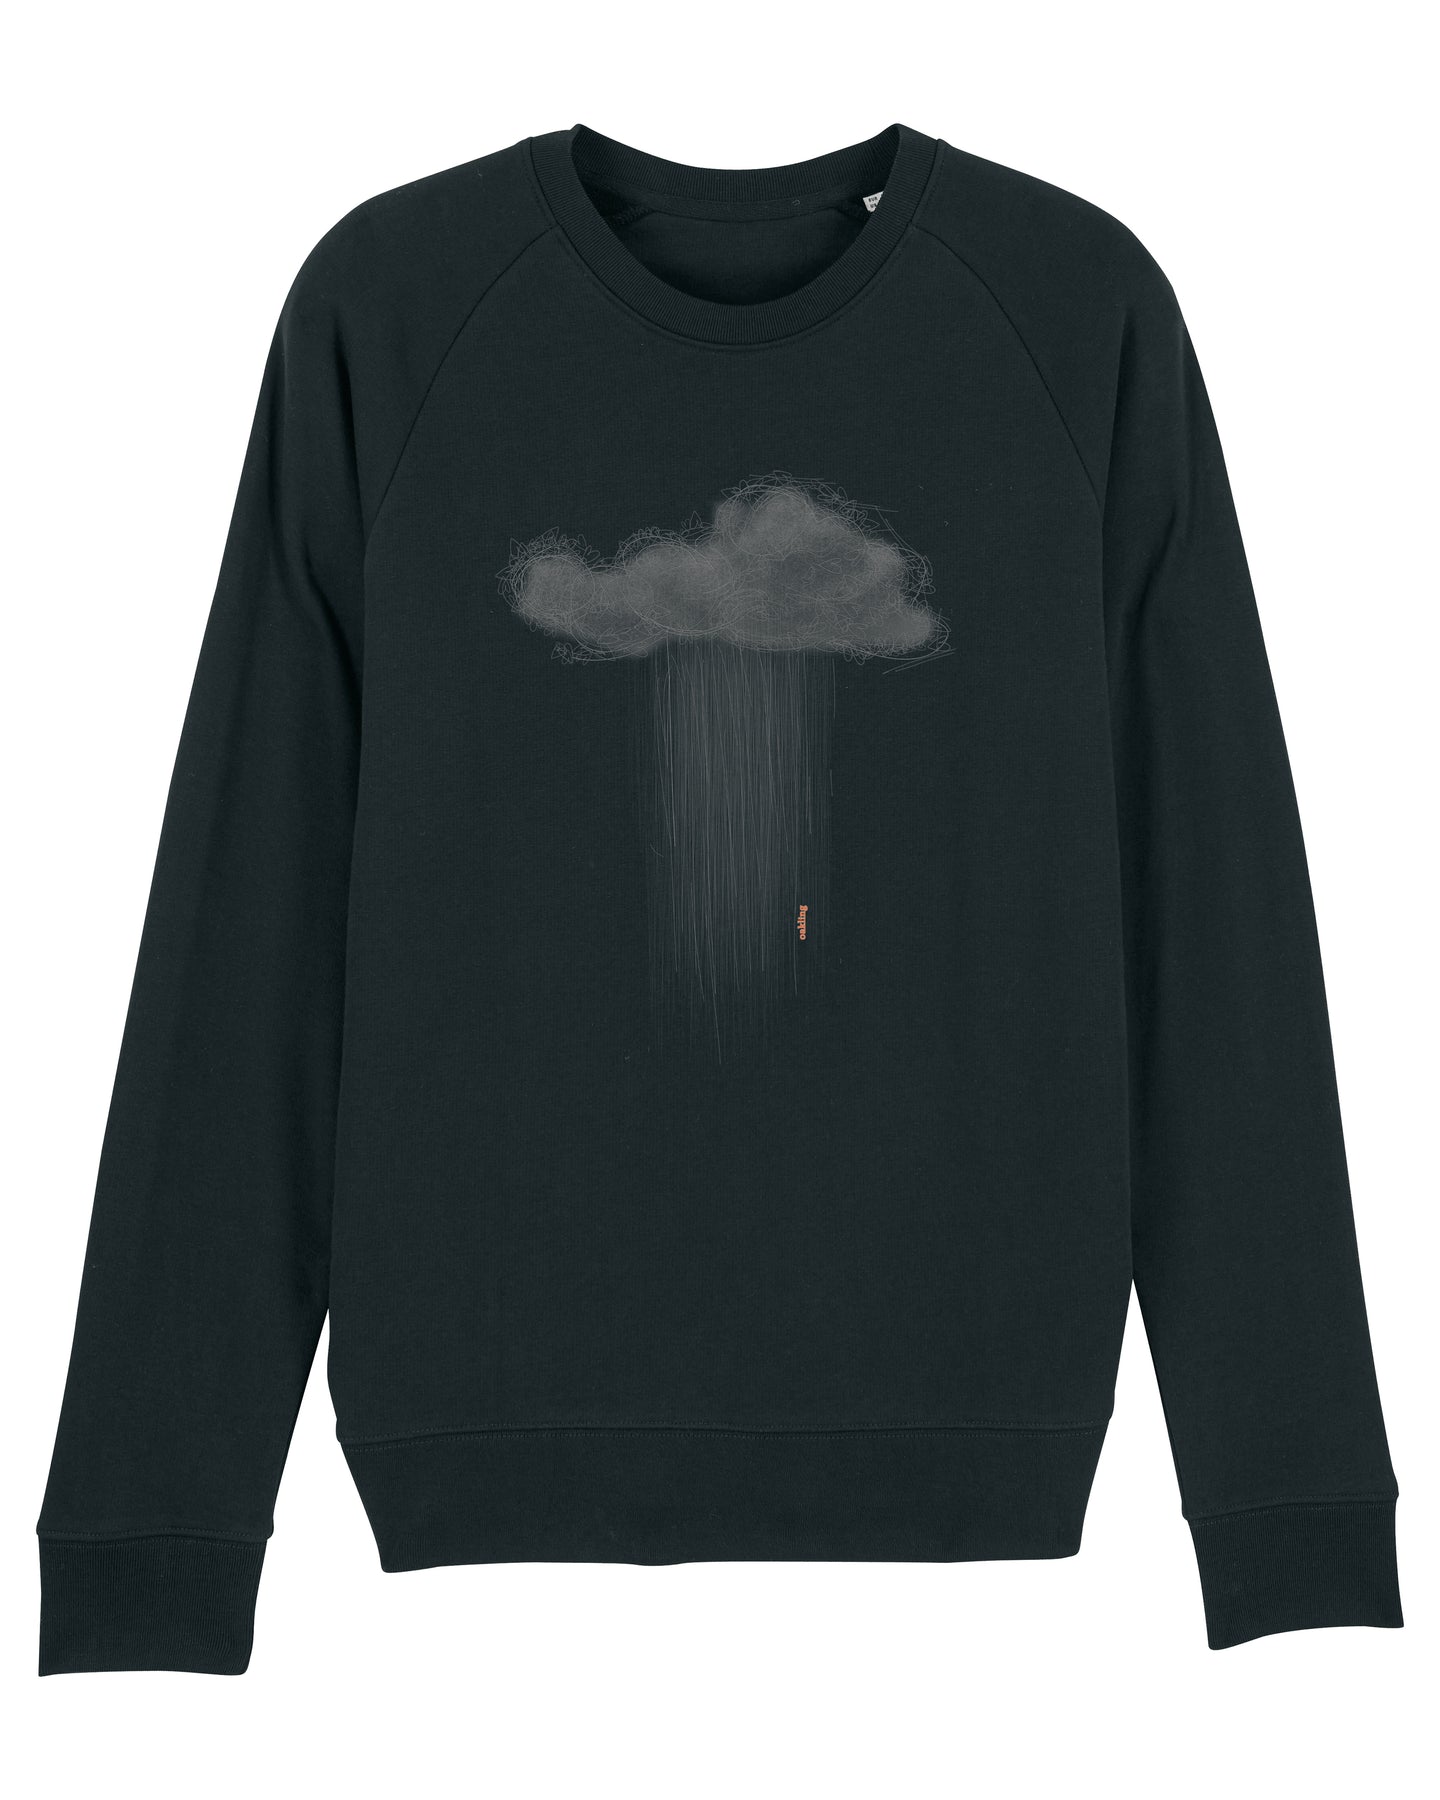 Organic Raglan Sweatshirt - The Cloud Black